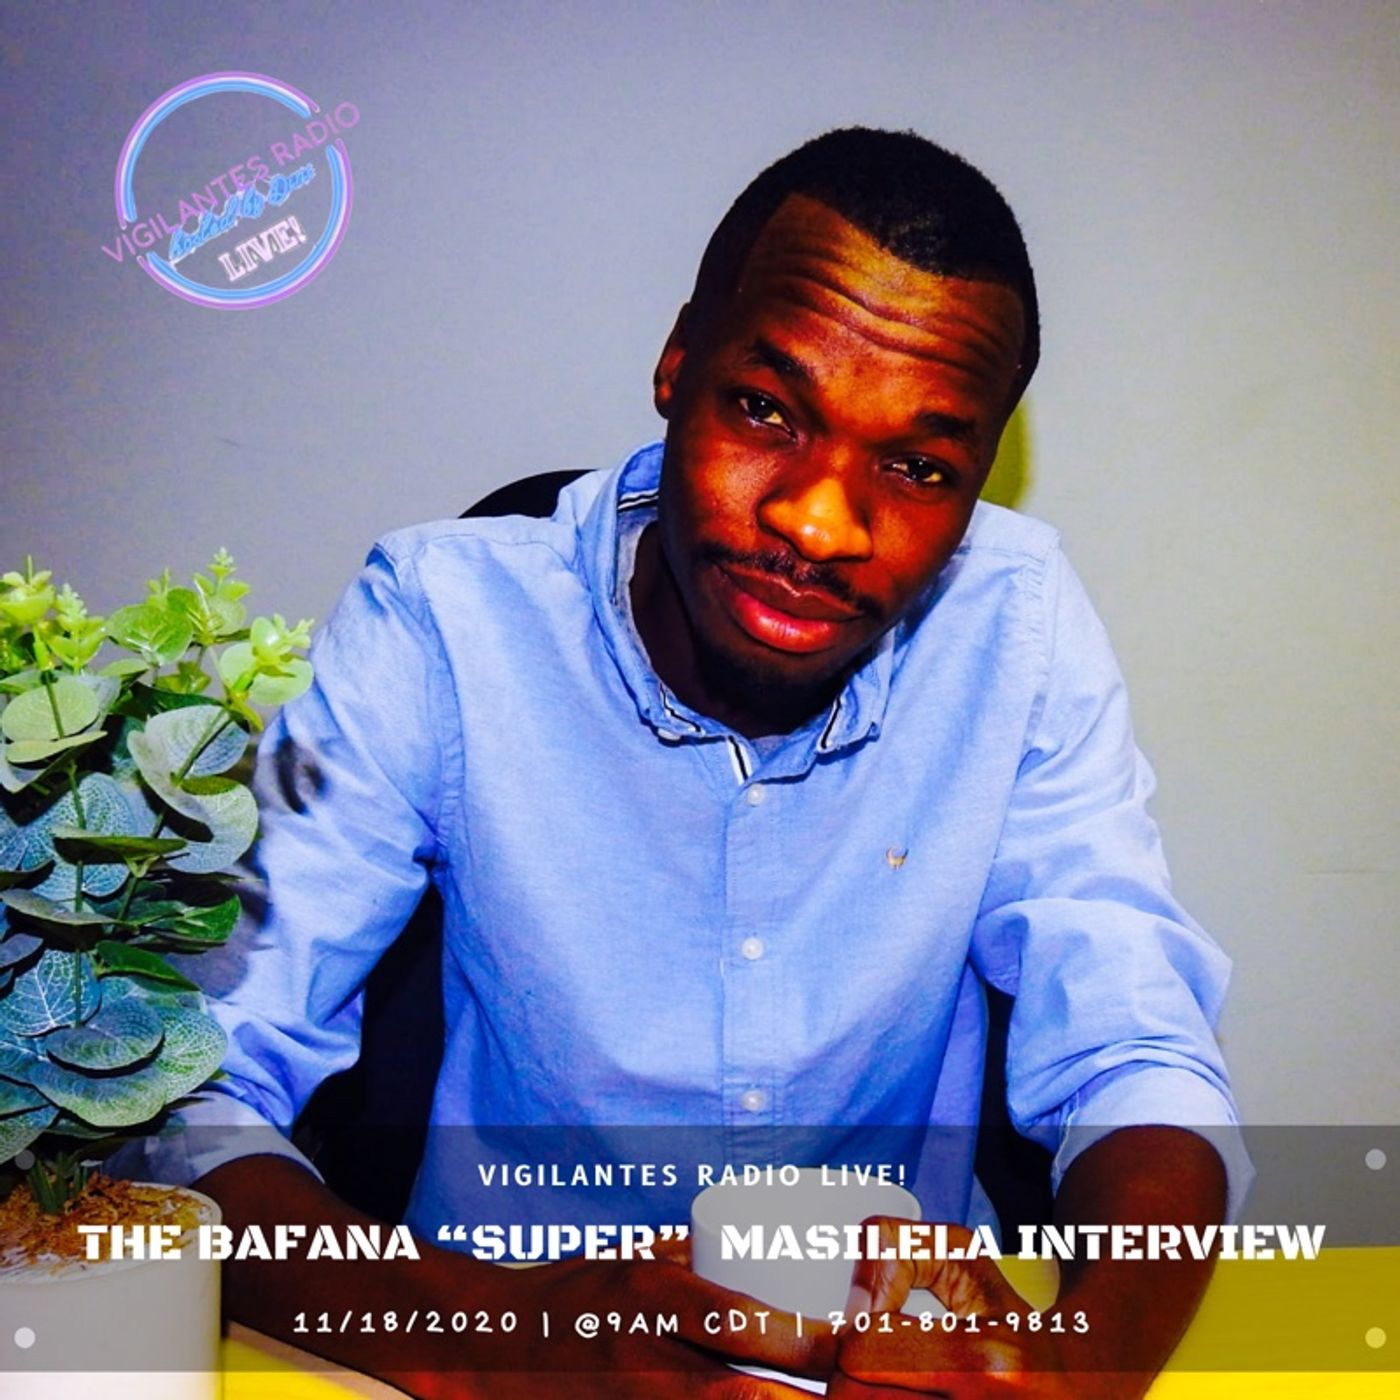 The Bafana “Super” Masilela Interview. Image